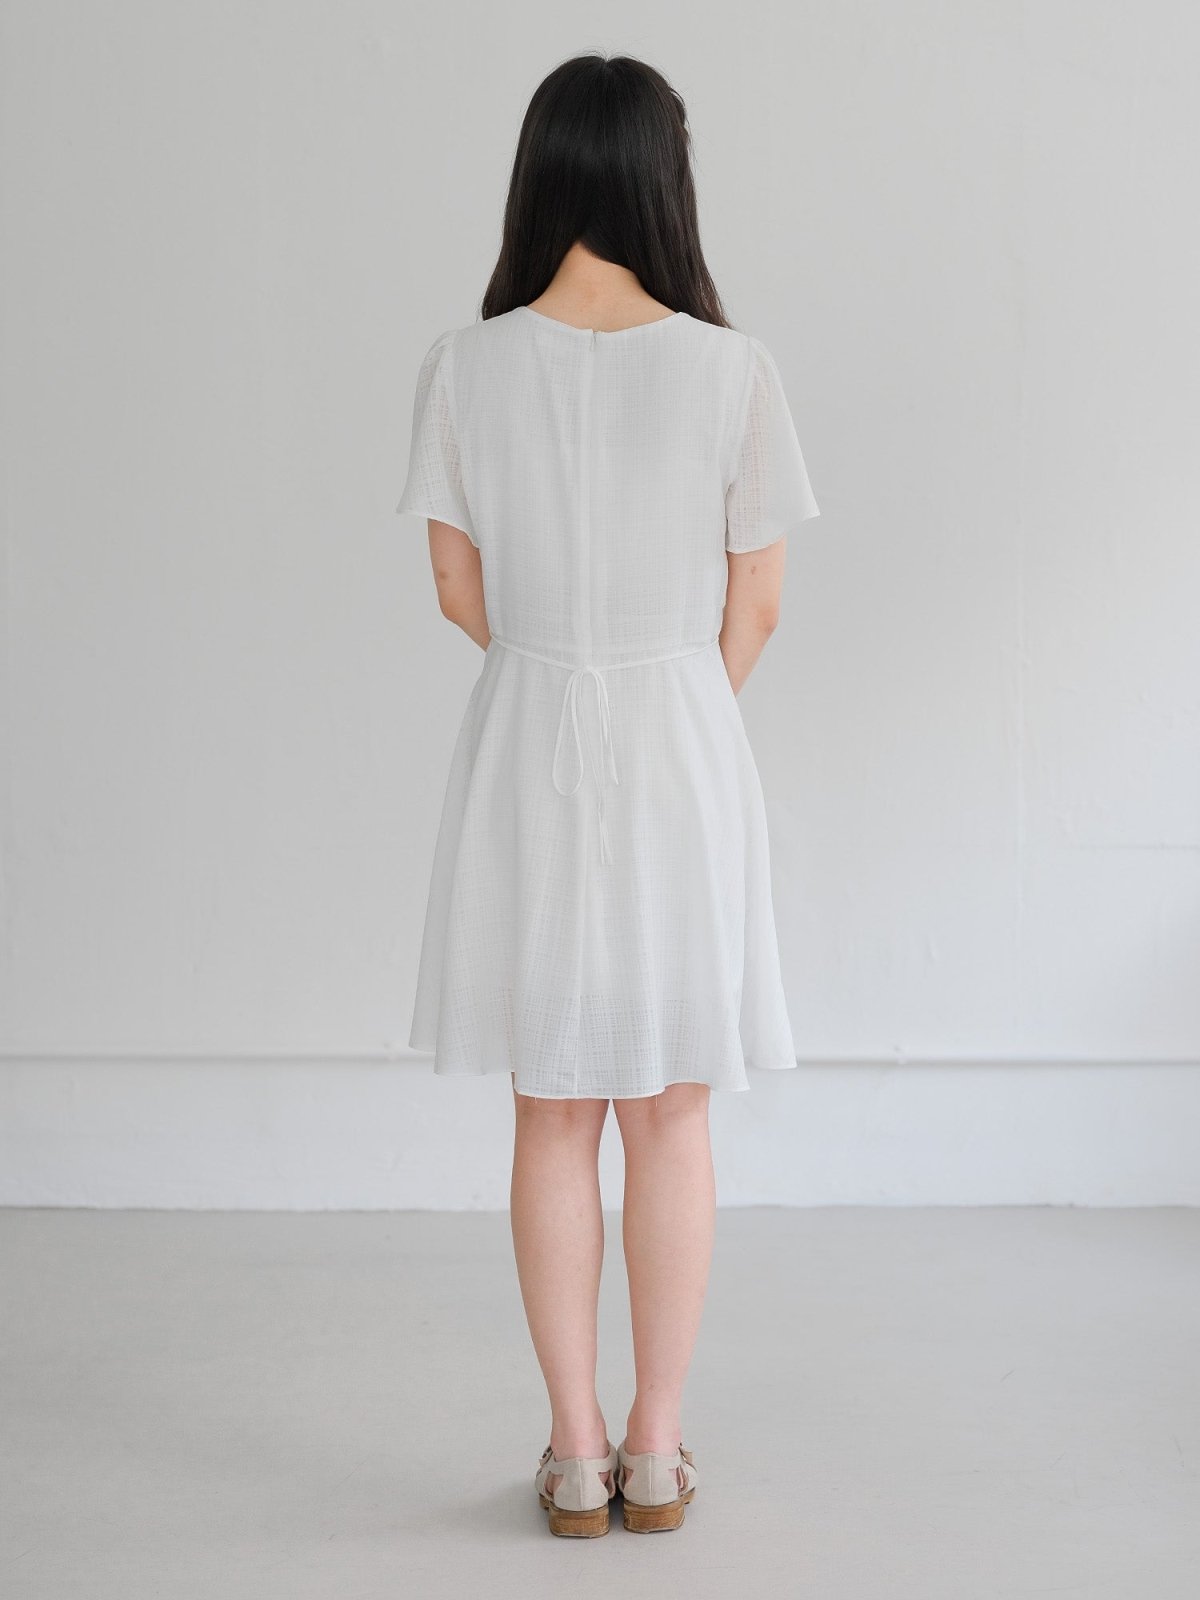 Seirra Check Mini Dress - DAG-DD0201-23IvoryPlaidS - Mochi Ivory - S - D'zage Designs